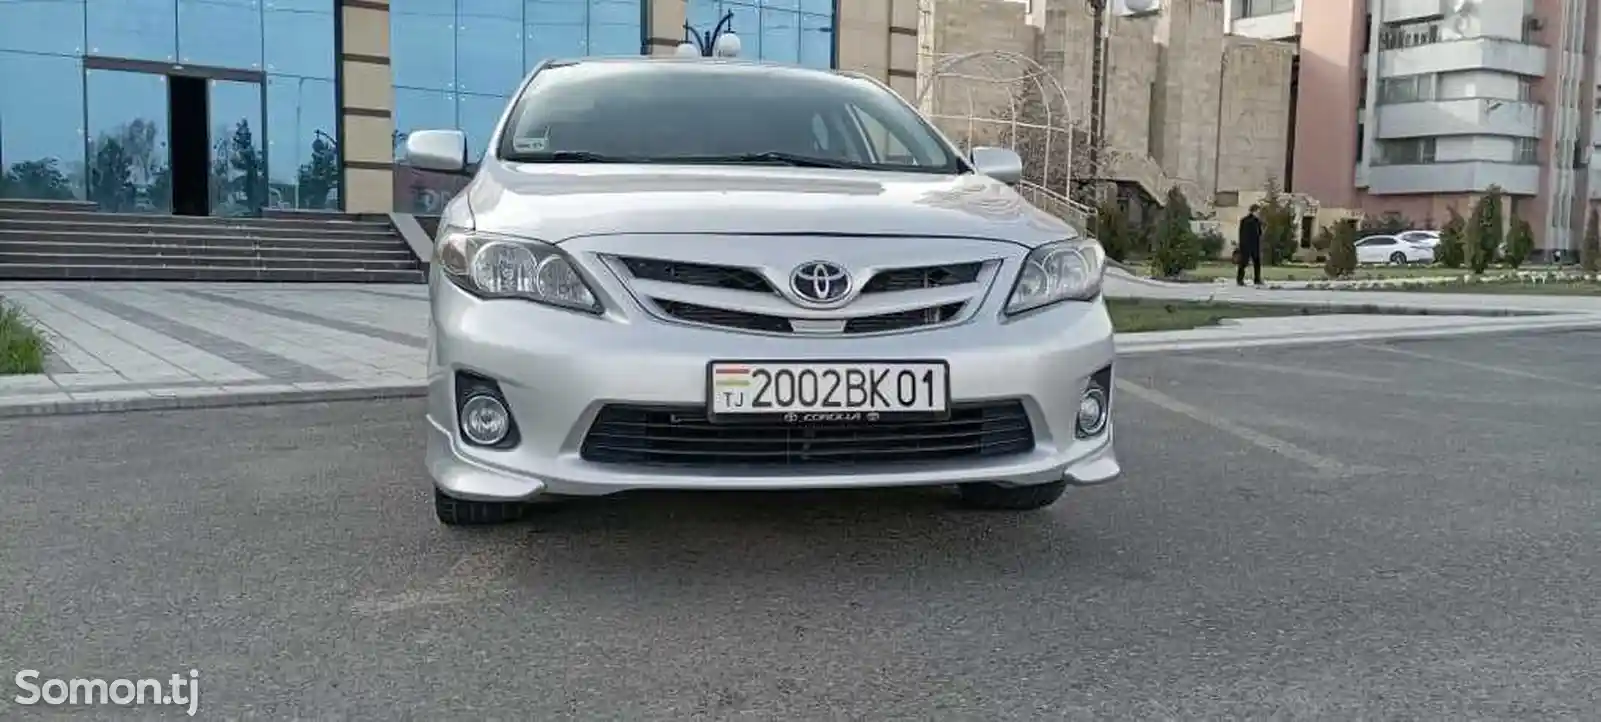 Toyota Corolla, 2013-10